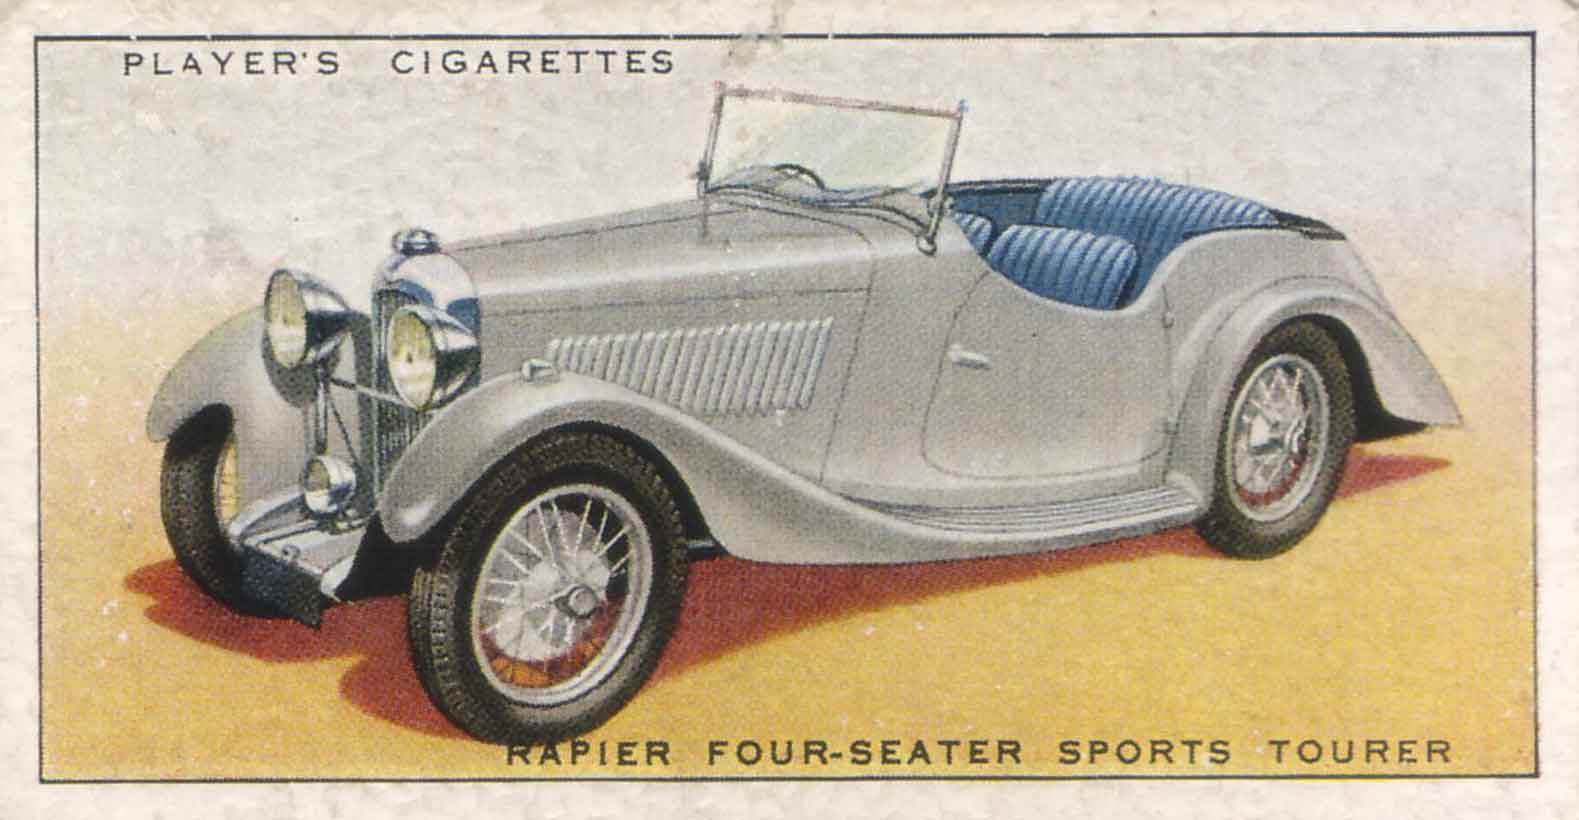 Rapier Sports Tourer. 1937 cigarette card.